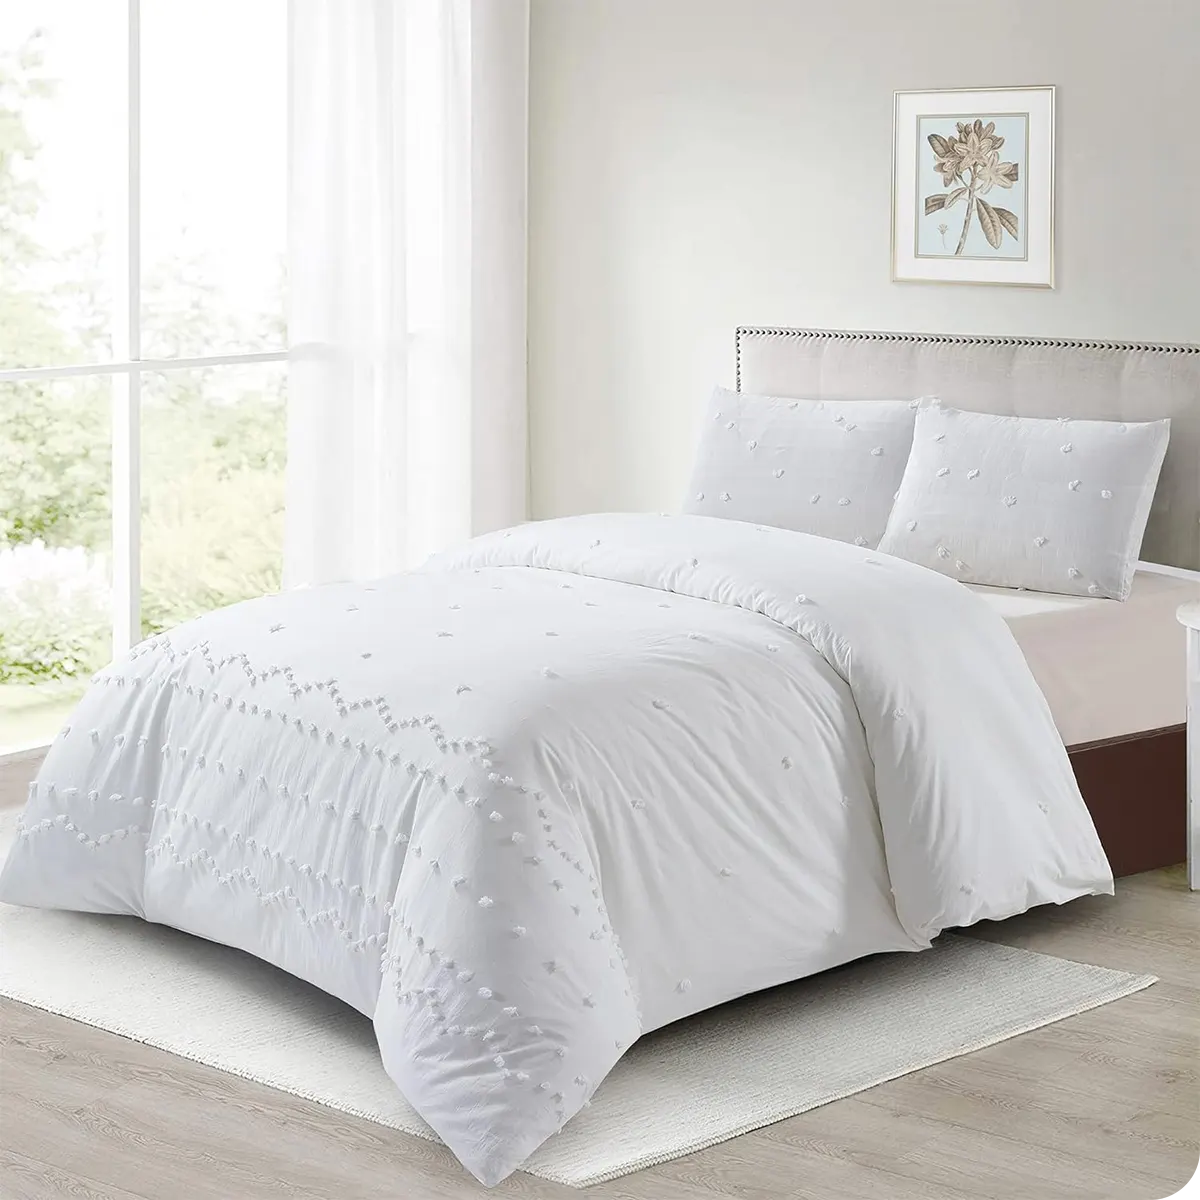 3-Piece Boho Queen Size White Duvet Covers Bedding Set detail